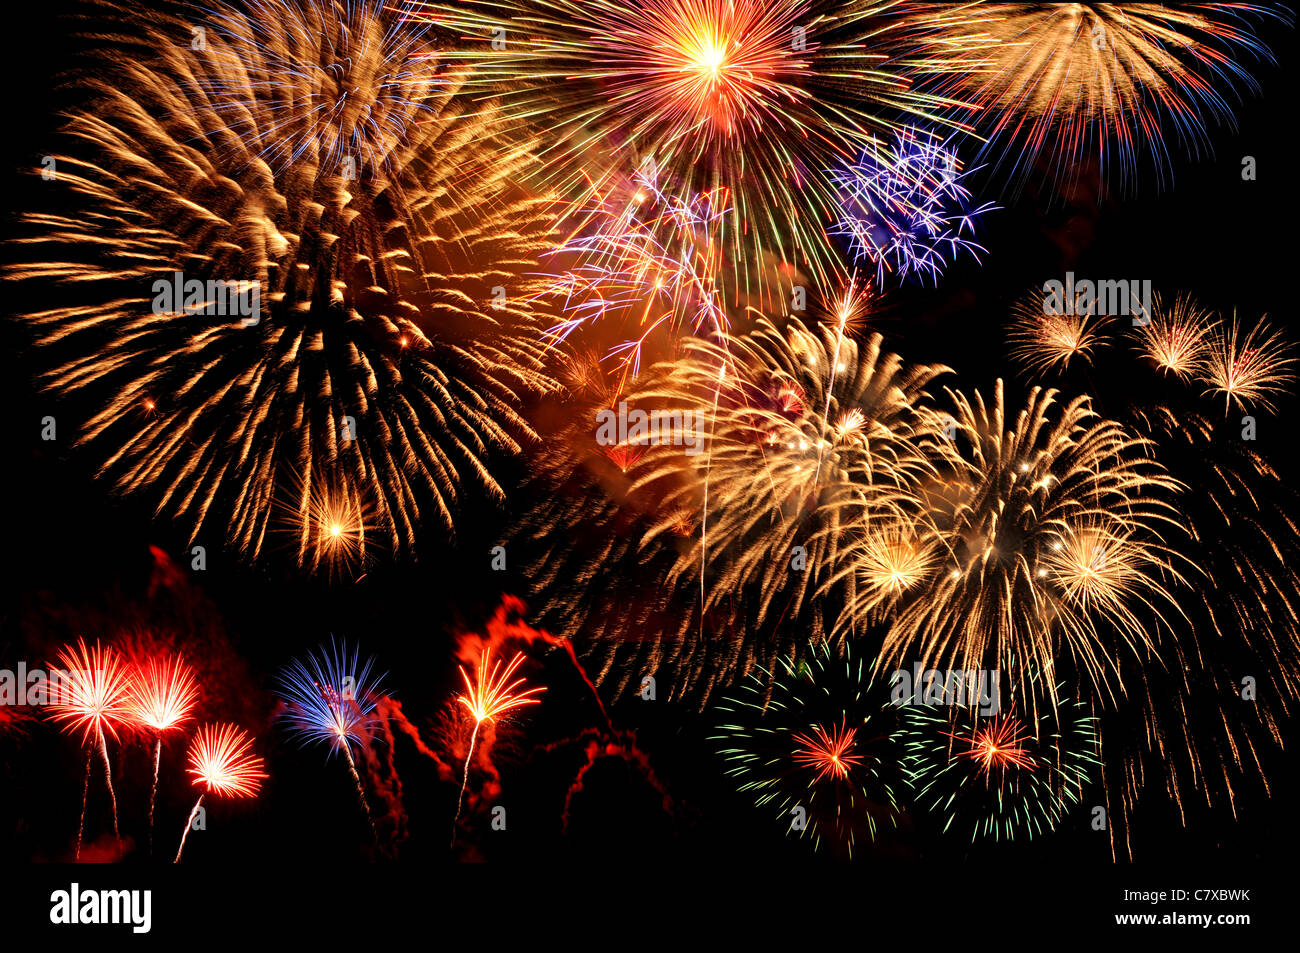 Fireworks of multiple colors bursting against a black background Stock Photo